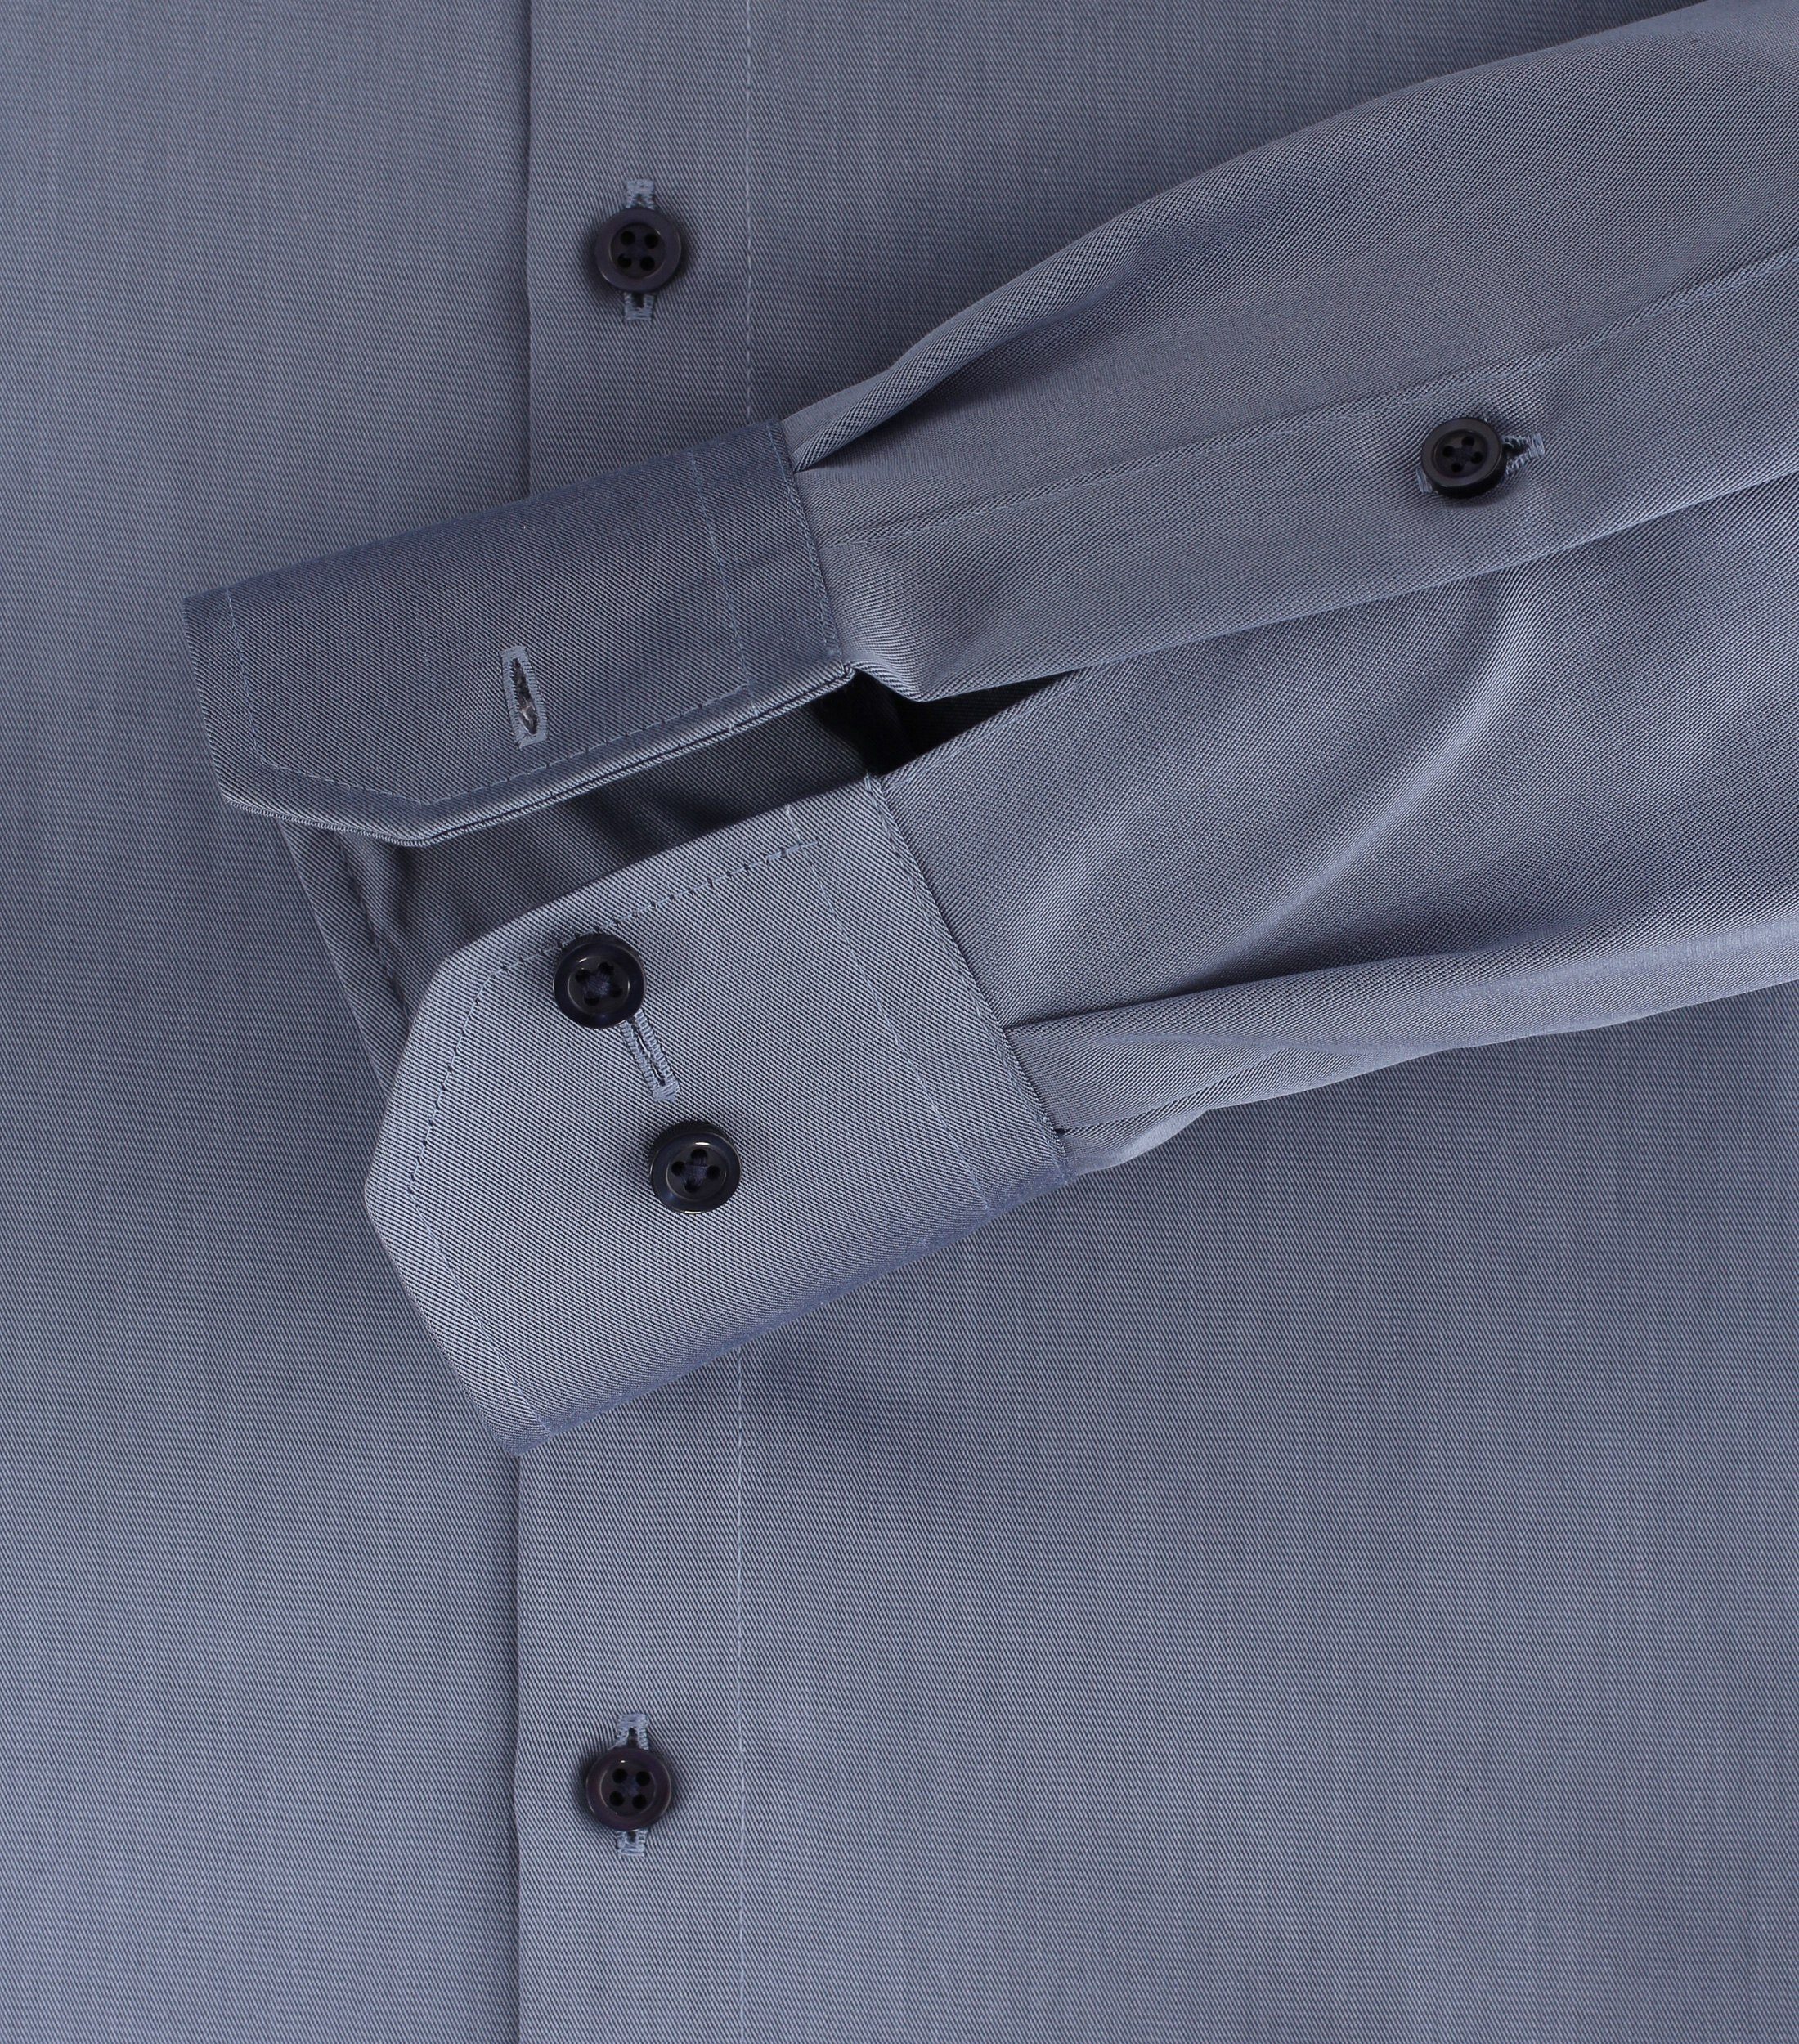 - Langarm Blau - Fit Businesshemd Dunkelblau Modern Businesshemd VENTI sattes Einfarbig - -